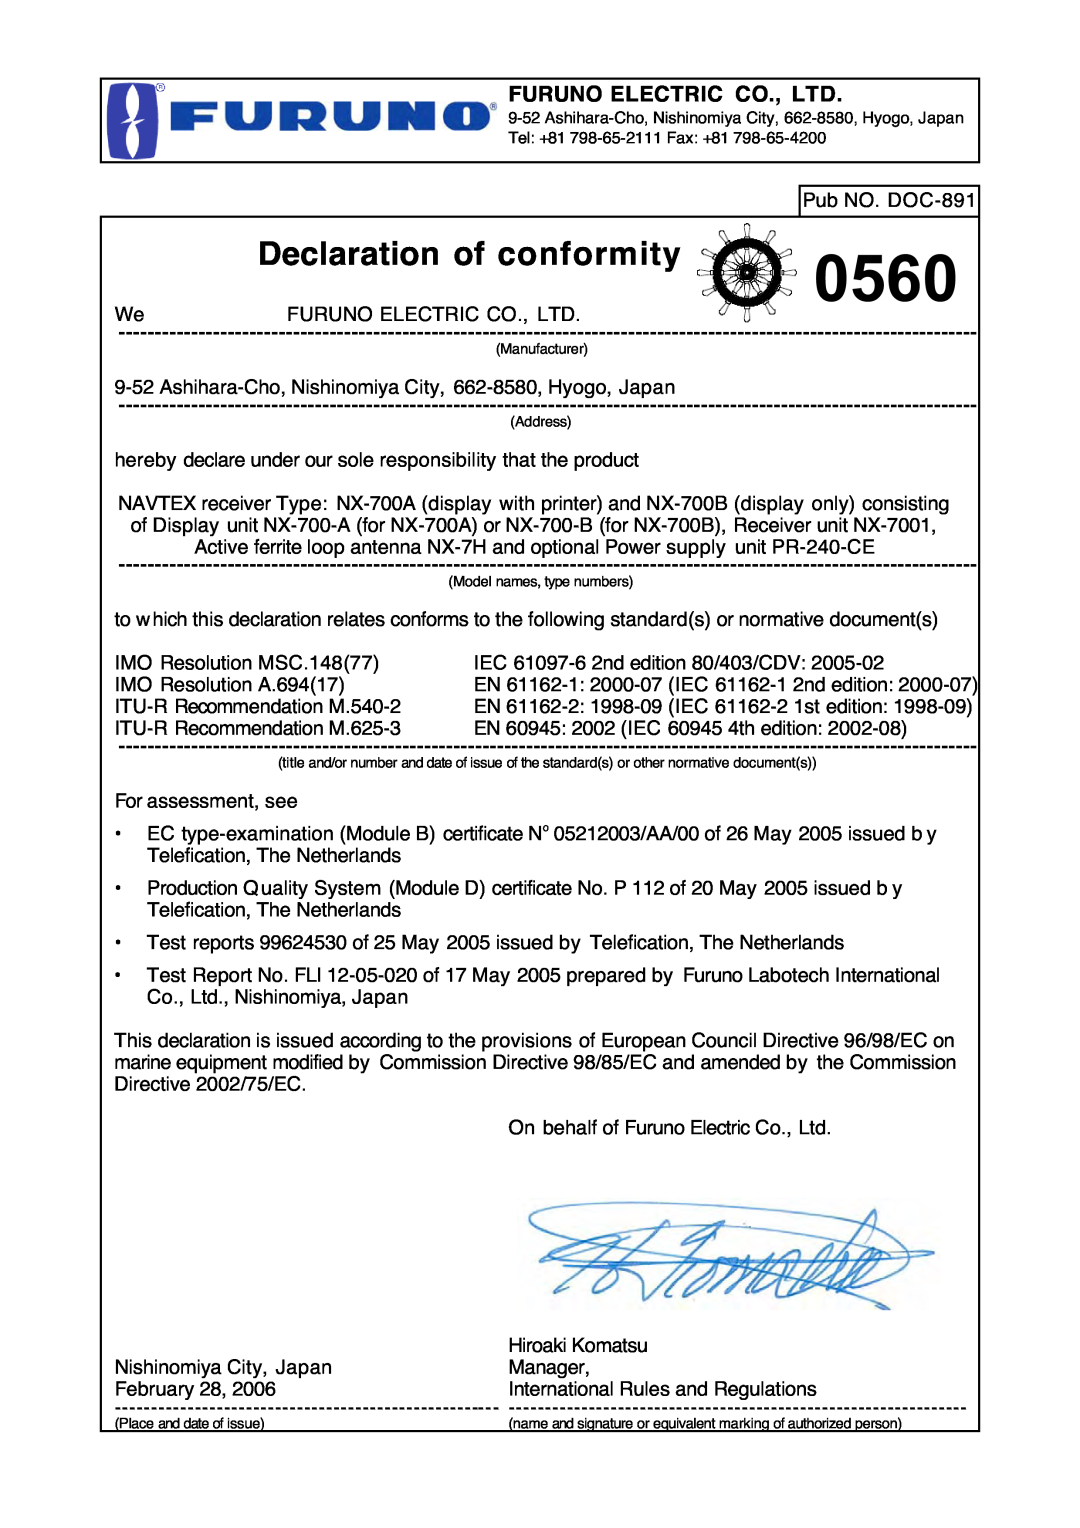 Furuno NX-700B manual Furuno Electric Co., Ltd, 0560, Declaration of conformity 